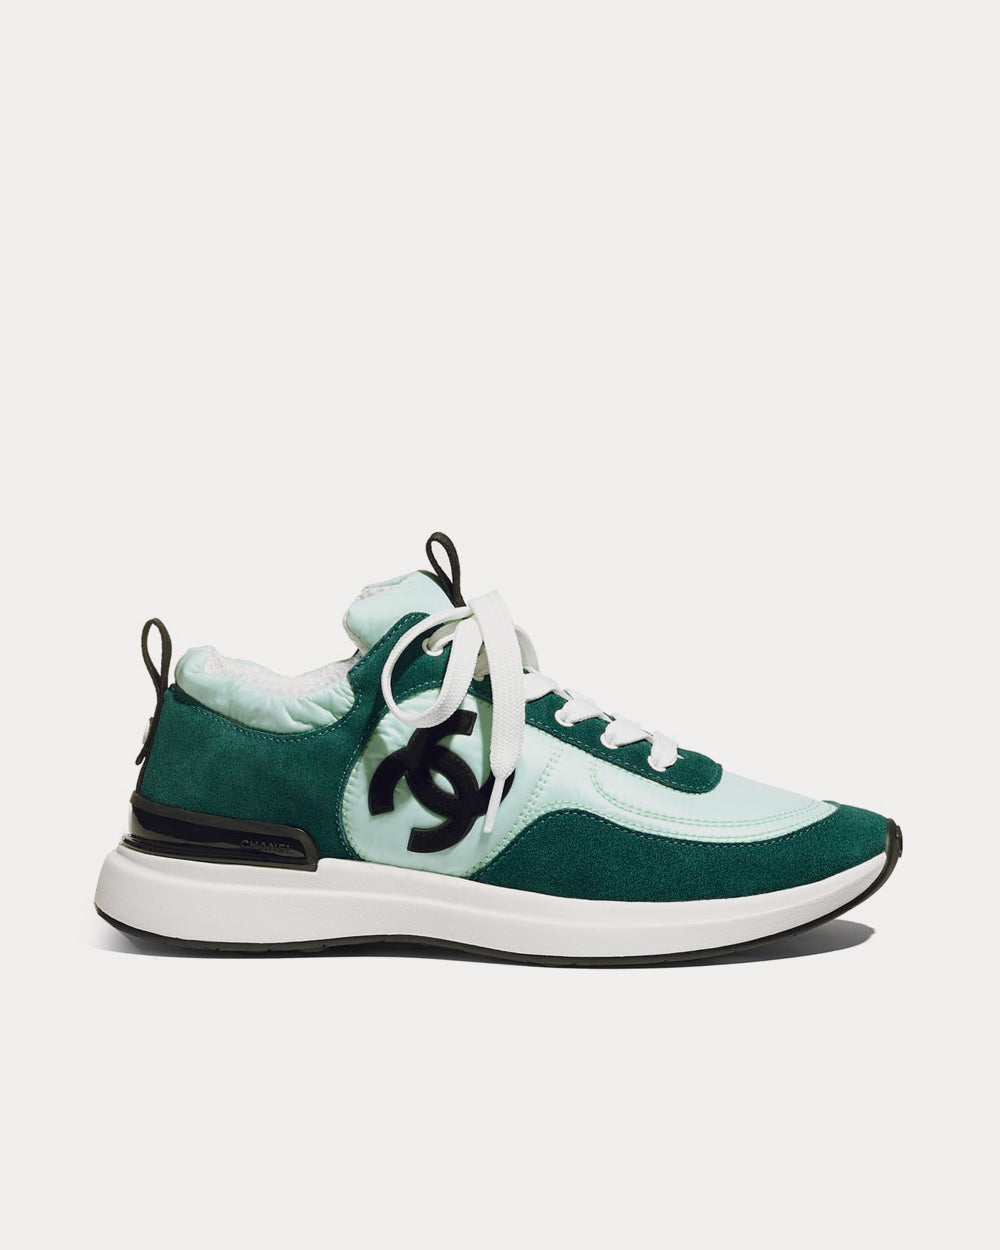 Chanel Suede Calfskin, Nylon Light Green, Green Low Top Sneakers